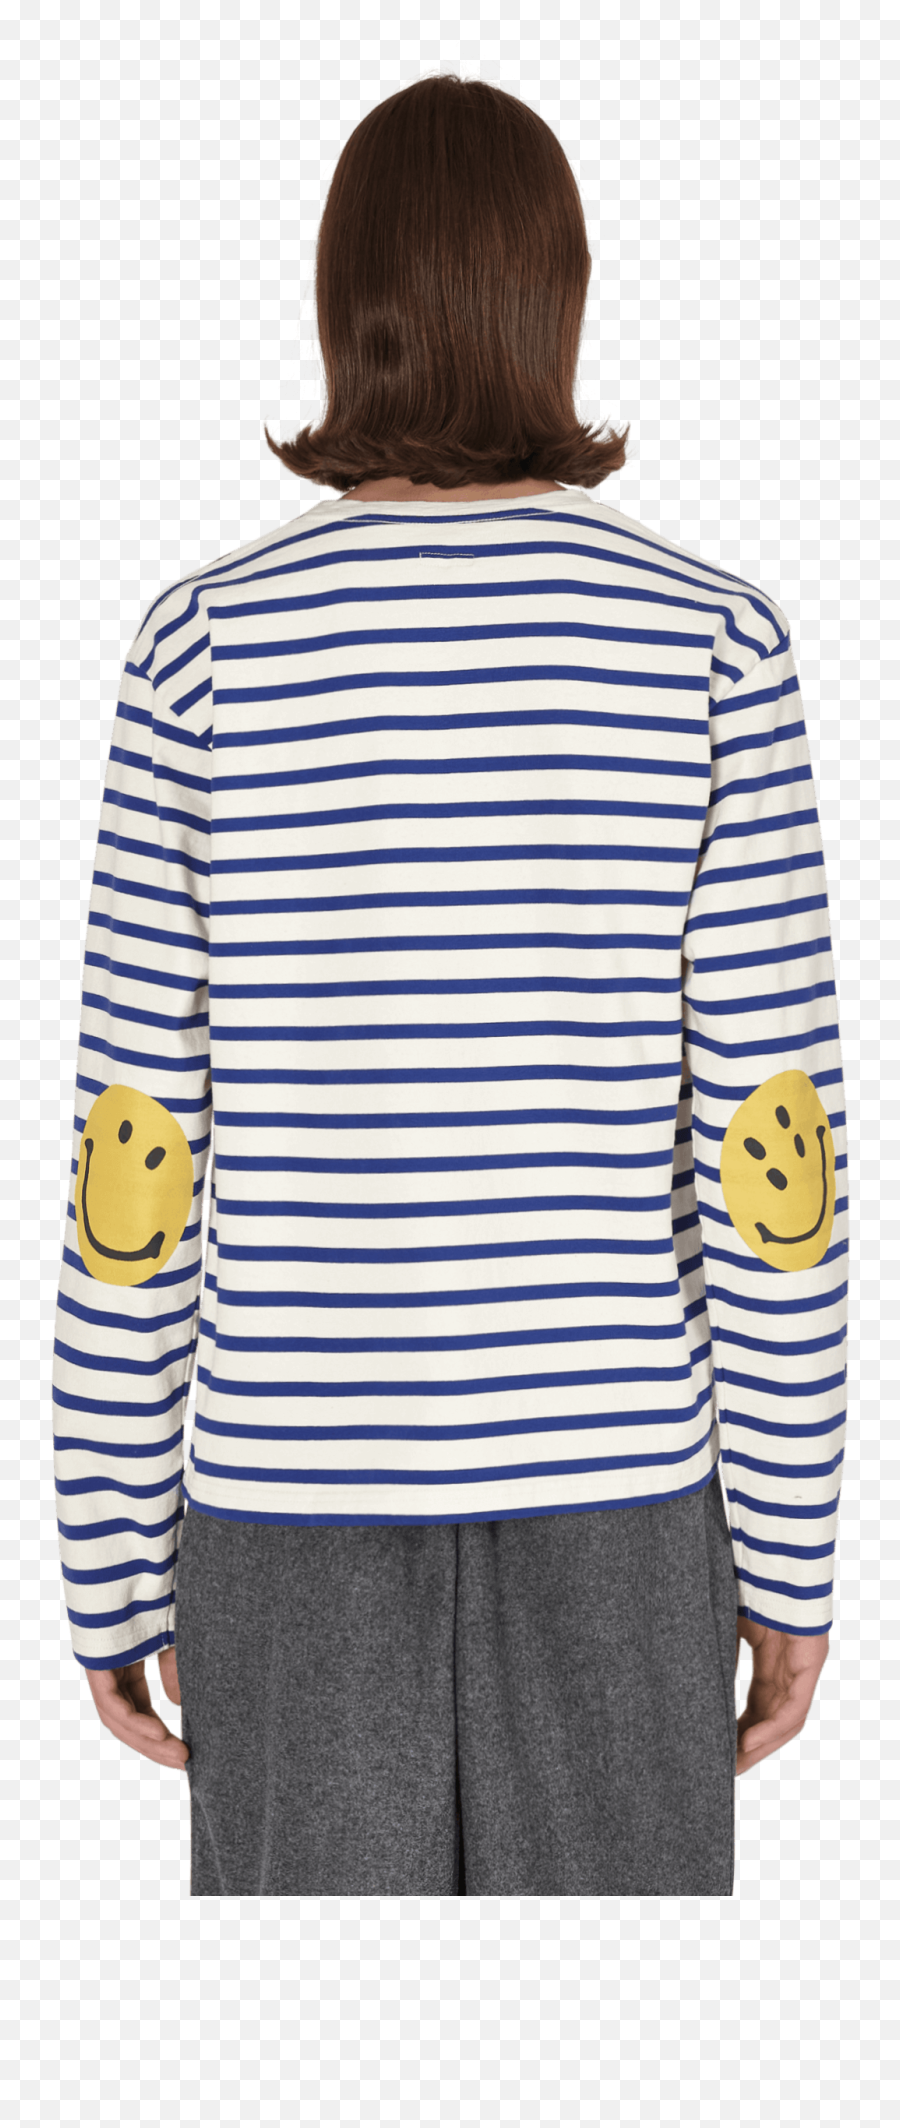 Kapital Smiley Elbow Patch Longsleeve T - Shirt Longsleeve T Bandolera Cruzada Zara Emoji,Pajamas Emoticon